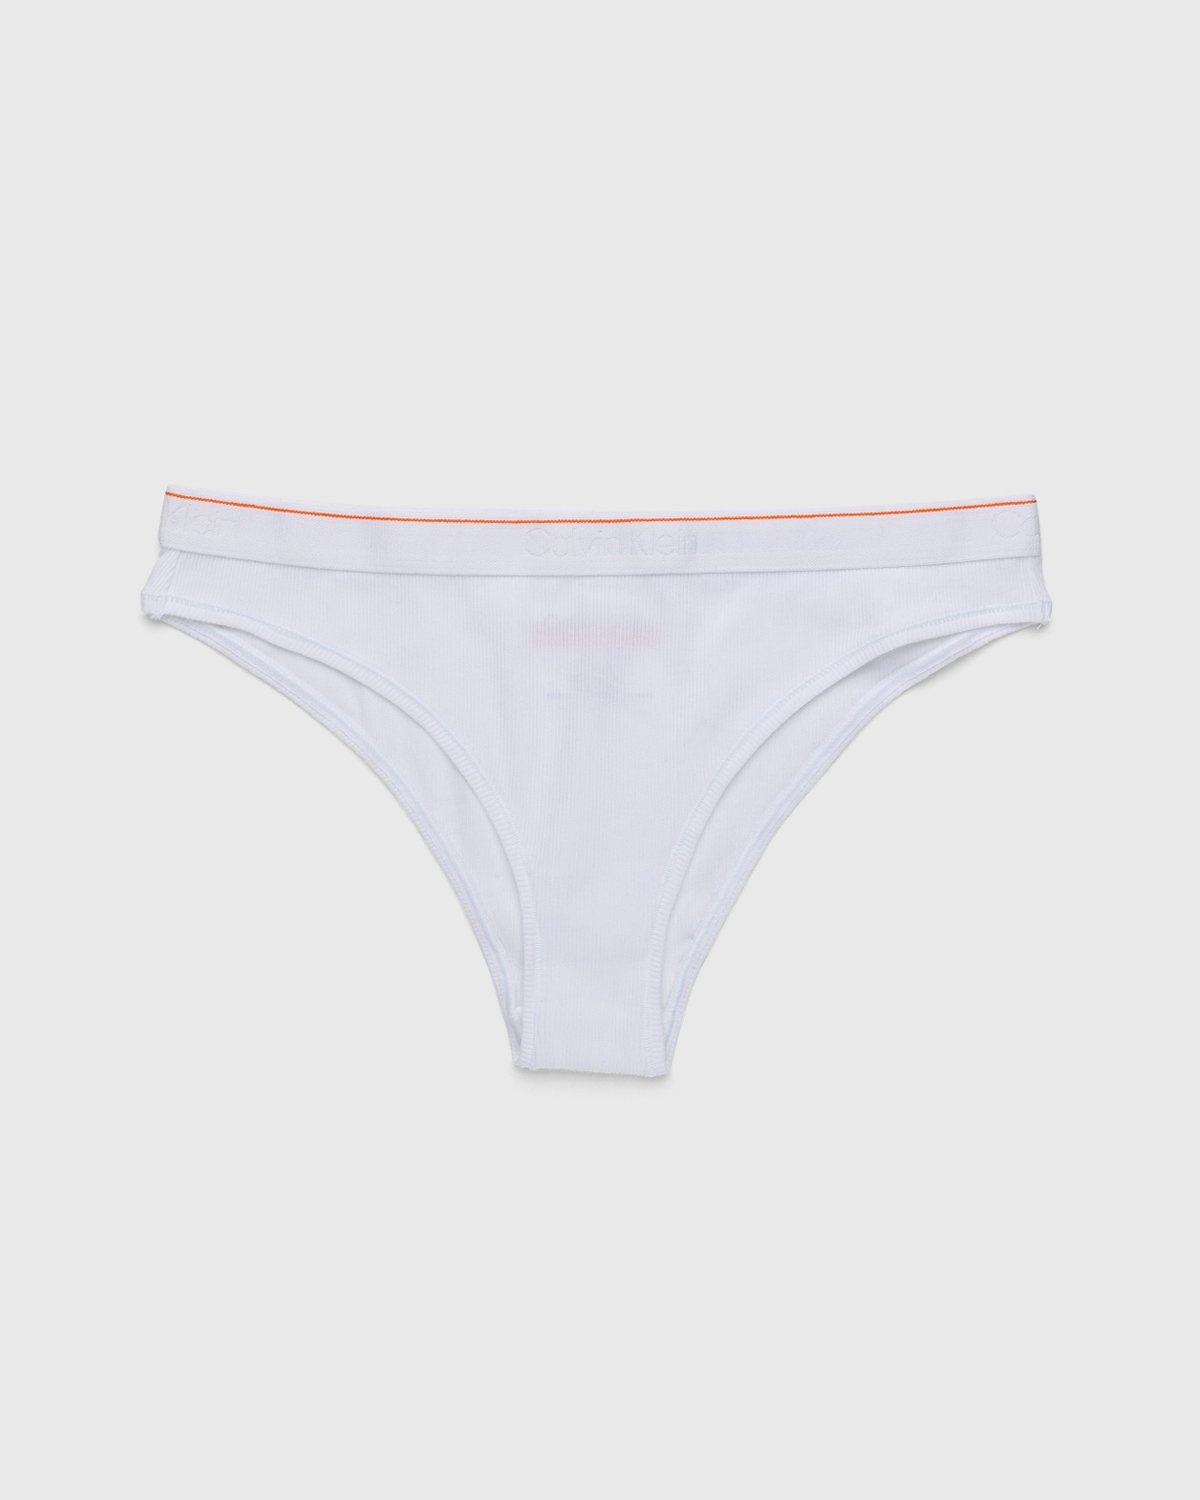 Calvin Klein Underwear Women Boy Short White Panty - Buy Calvin